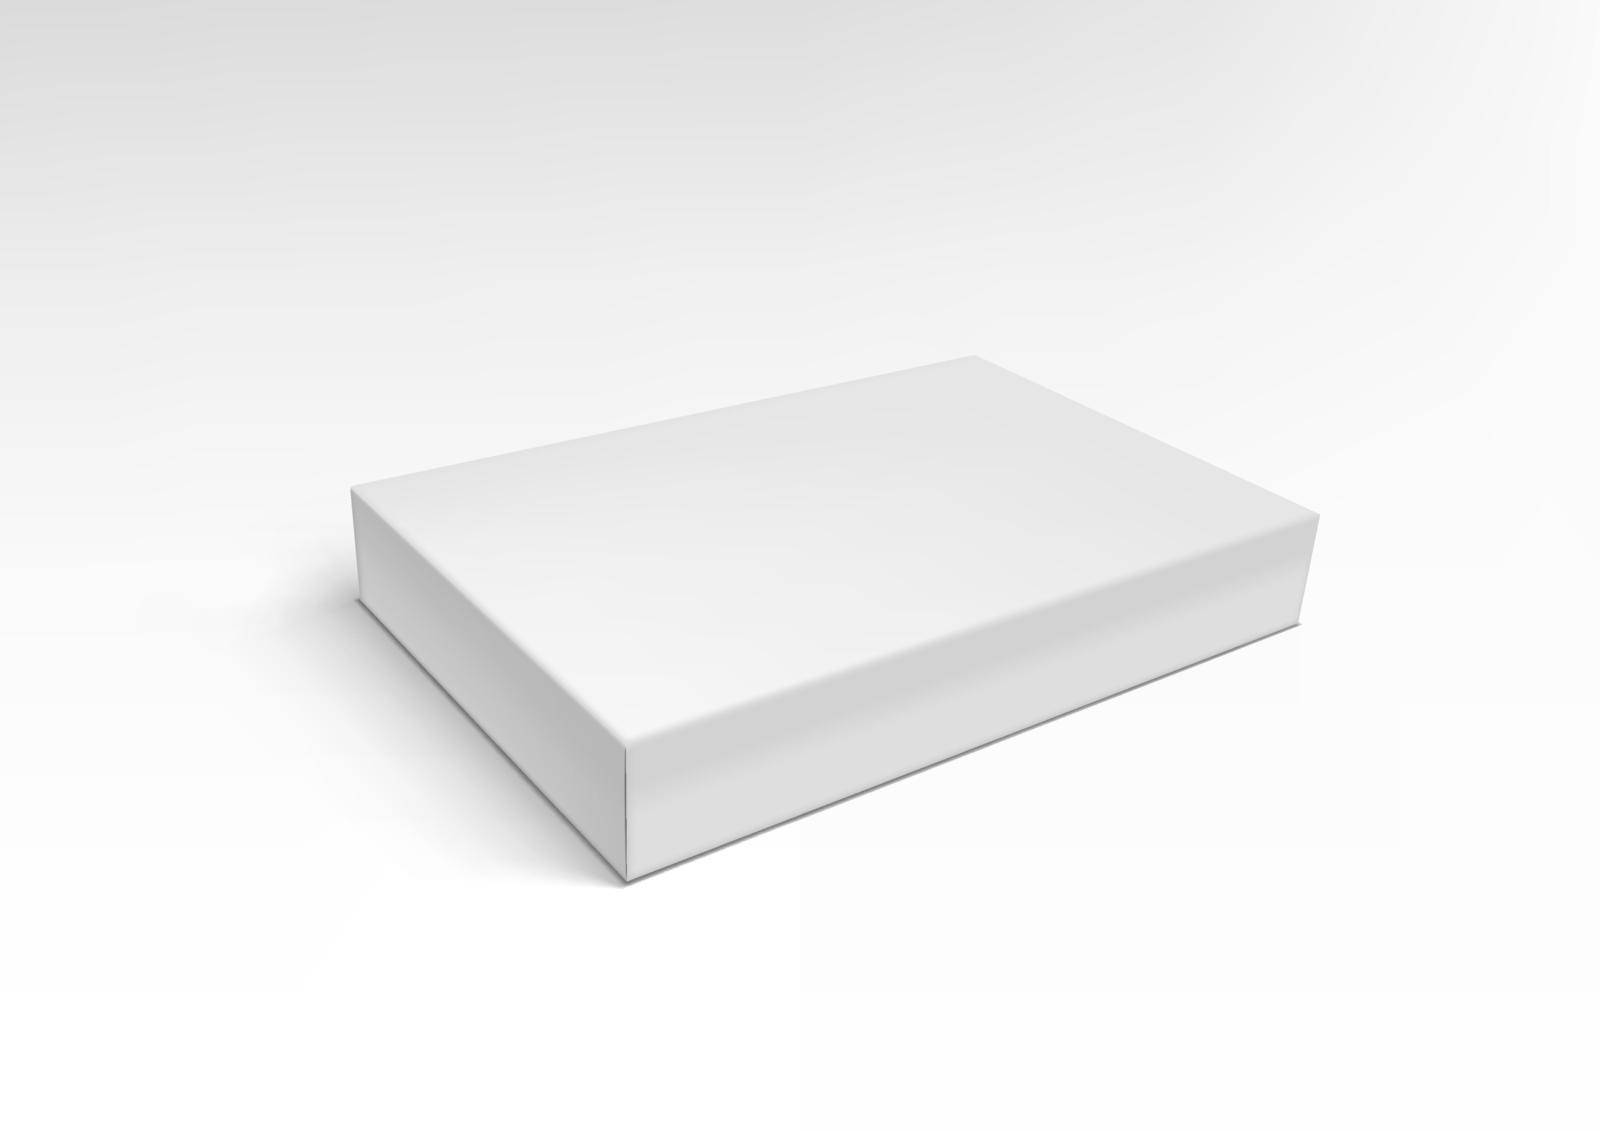 White Slim Pasteboard Box Isolated On White Background. EPS10 Vector